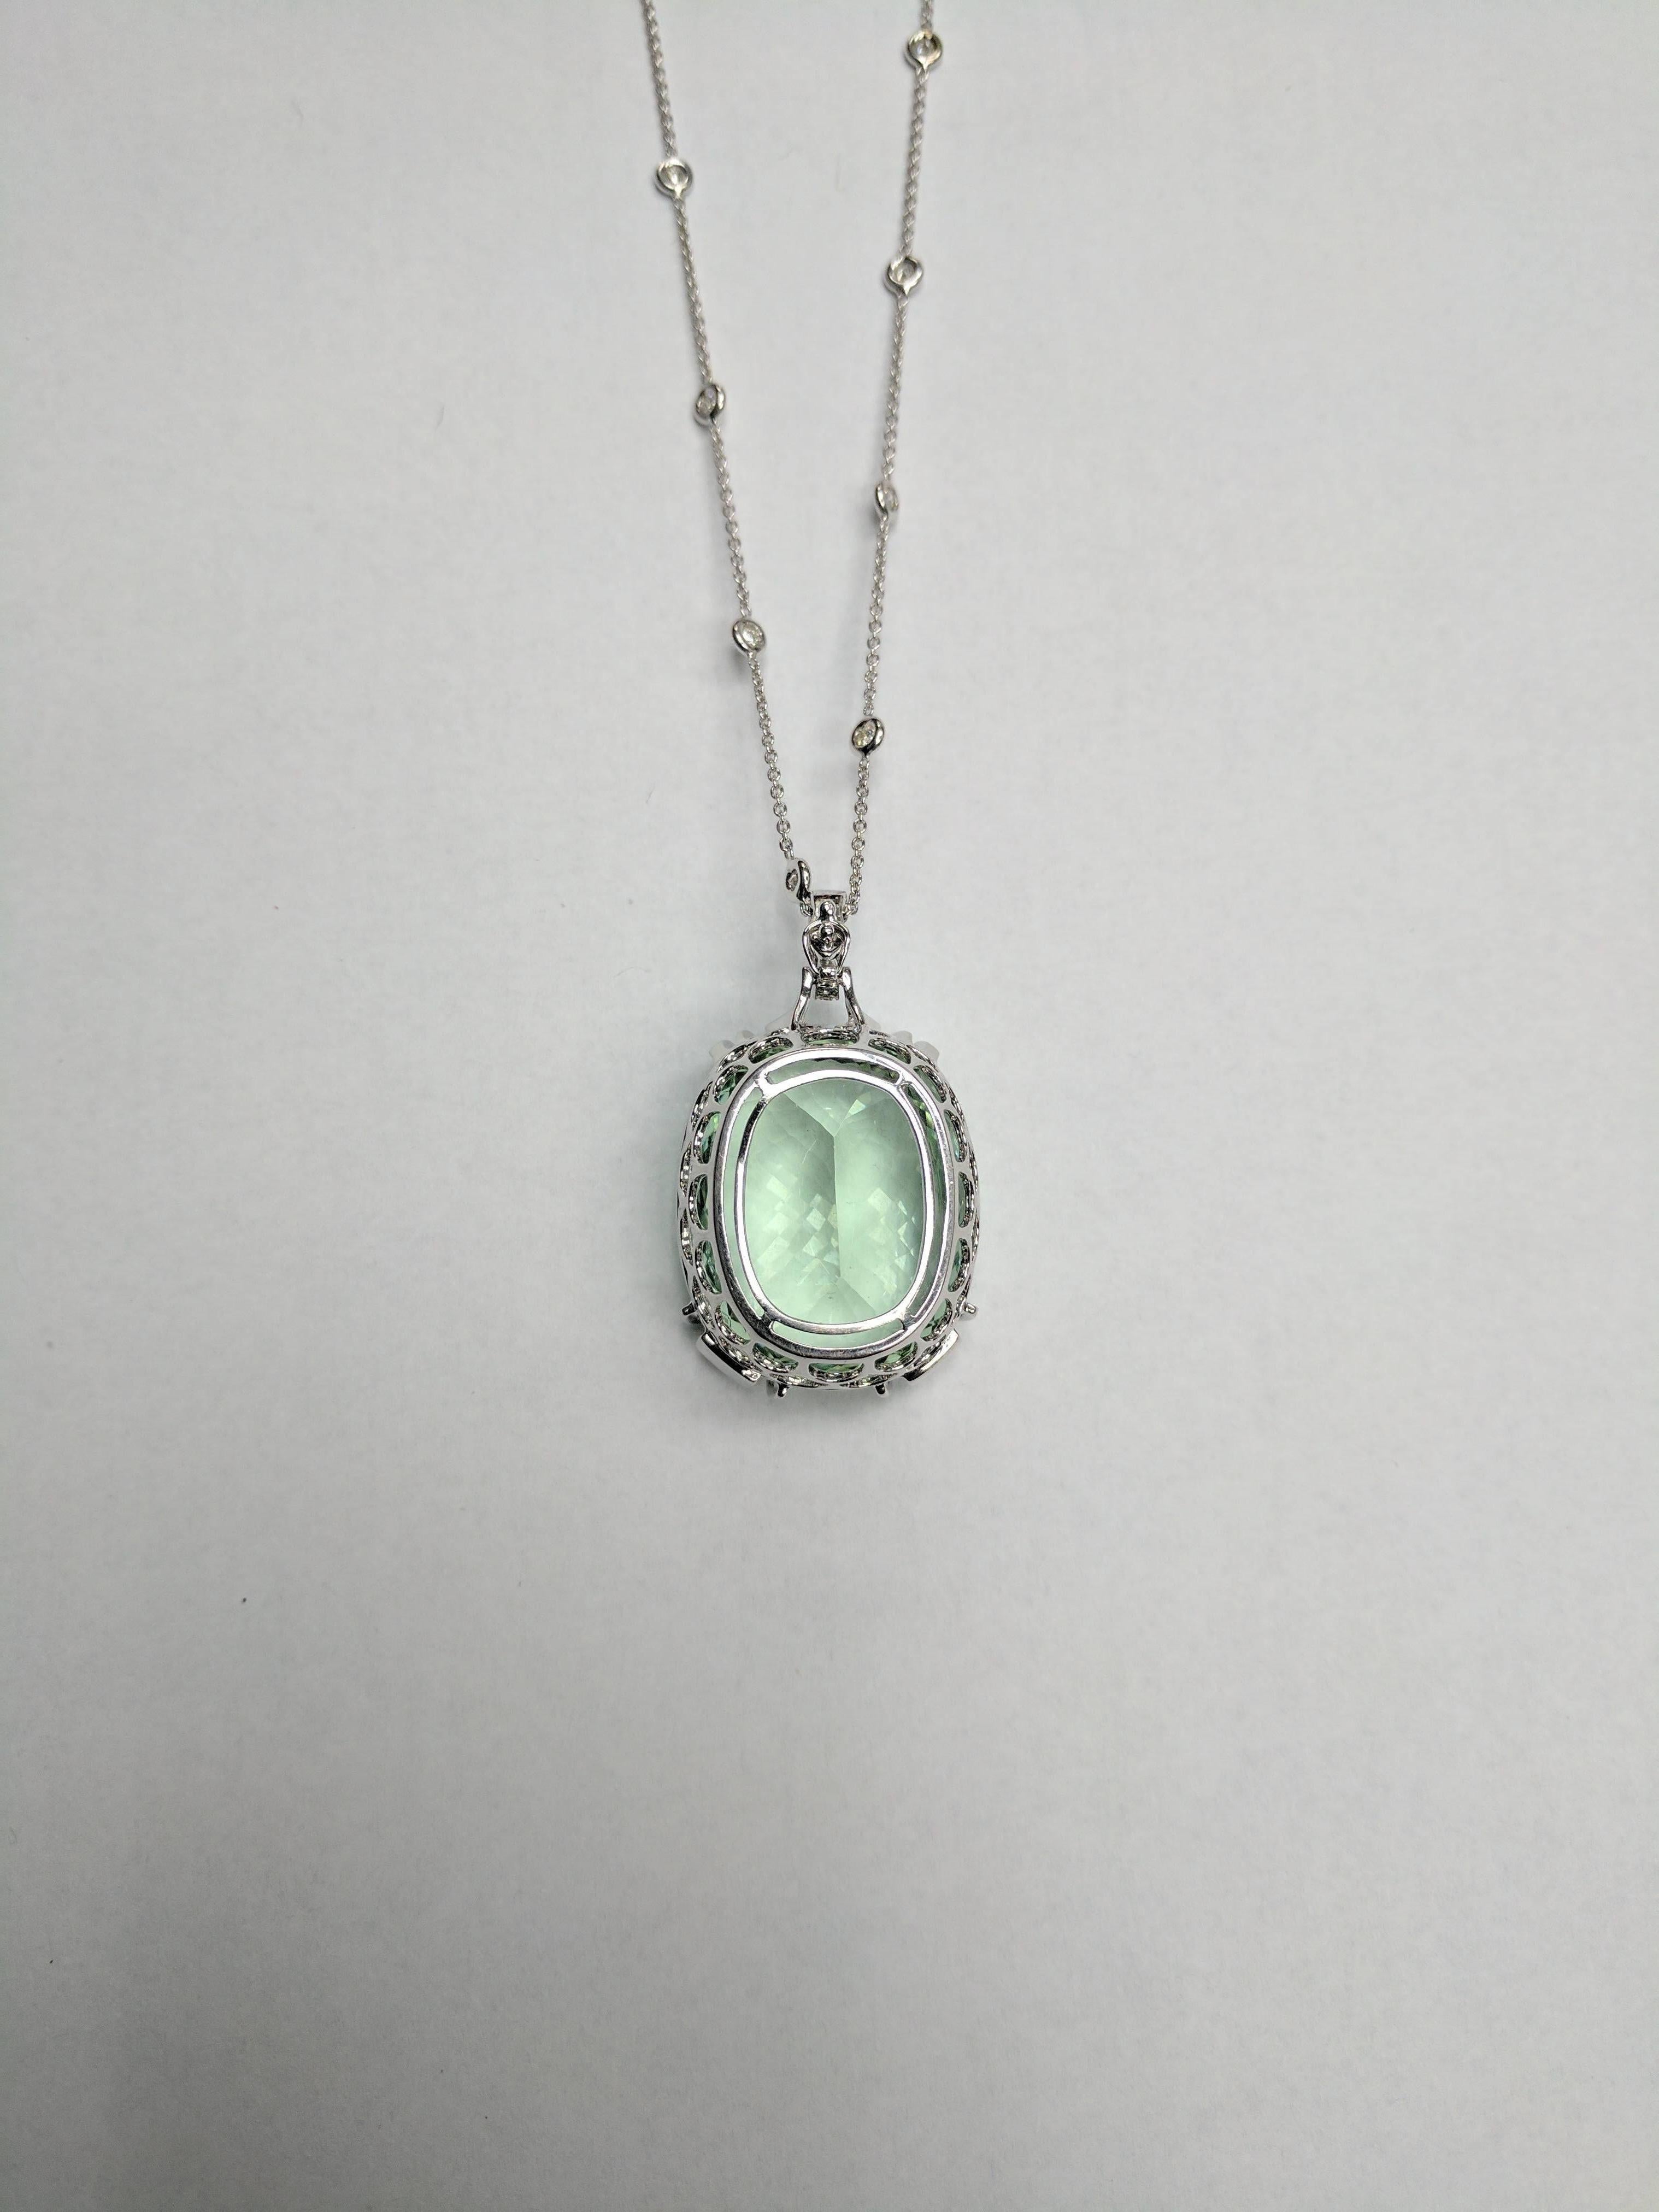 Contemporary Frederic Sage 76.83 Carat Green Beryl Diamond Pendant Necklace Diamond Chain For Sale